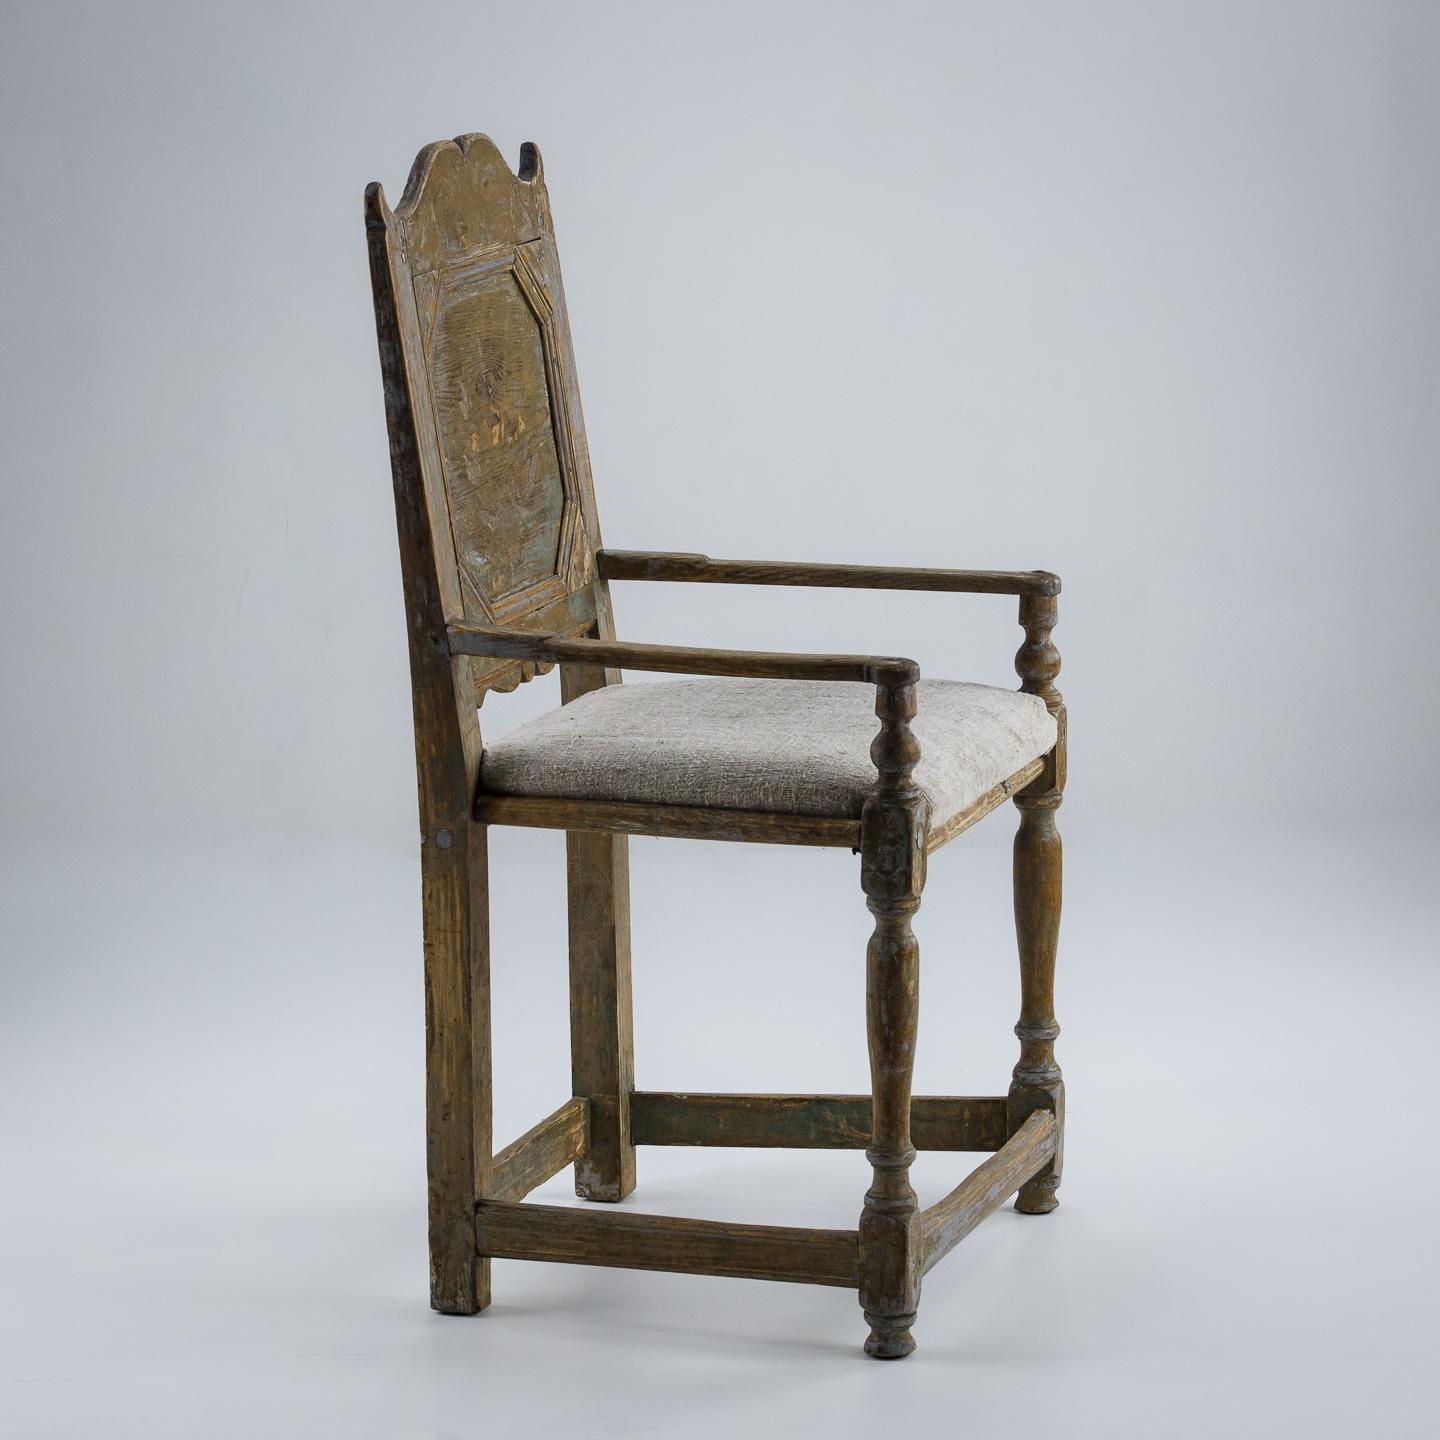 18th Century Swedish Vernacular Chair in Original Blue Paint 1